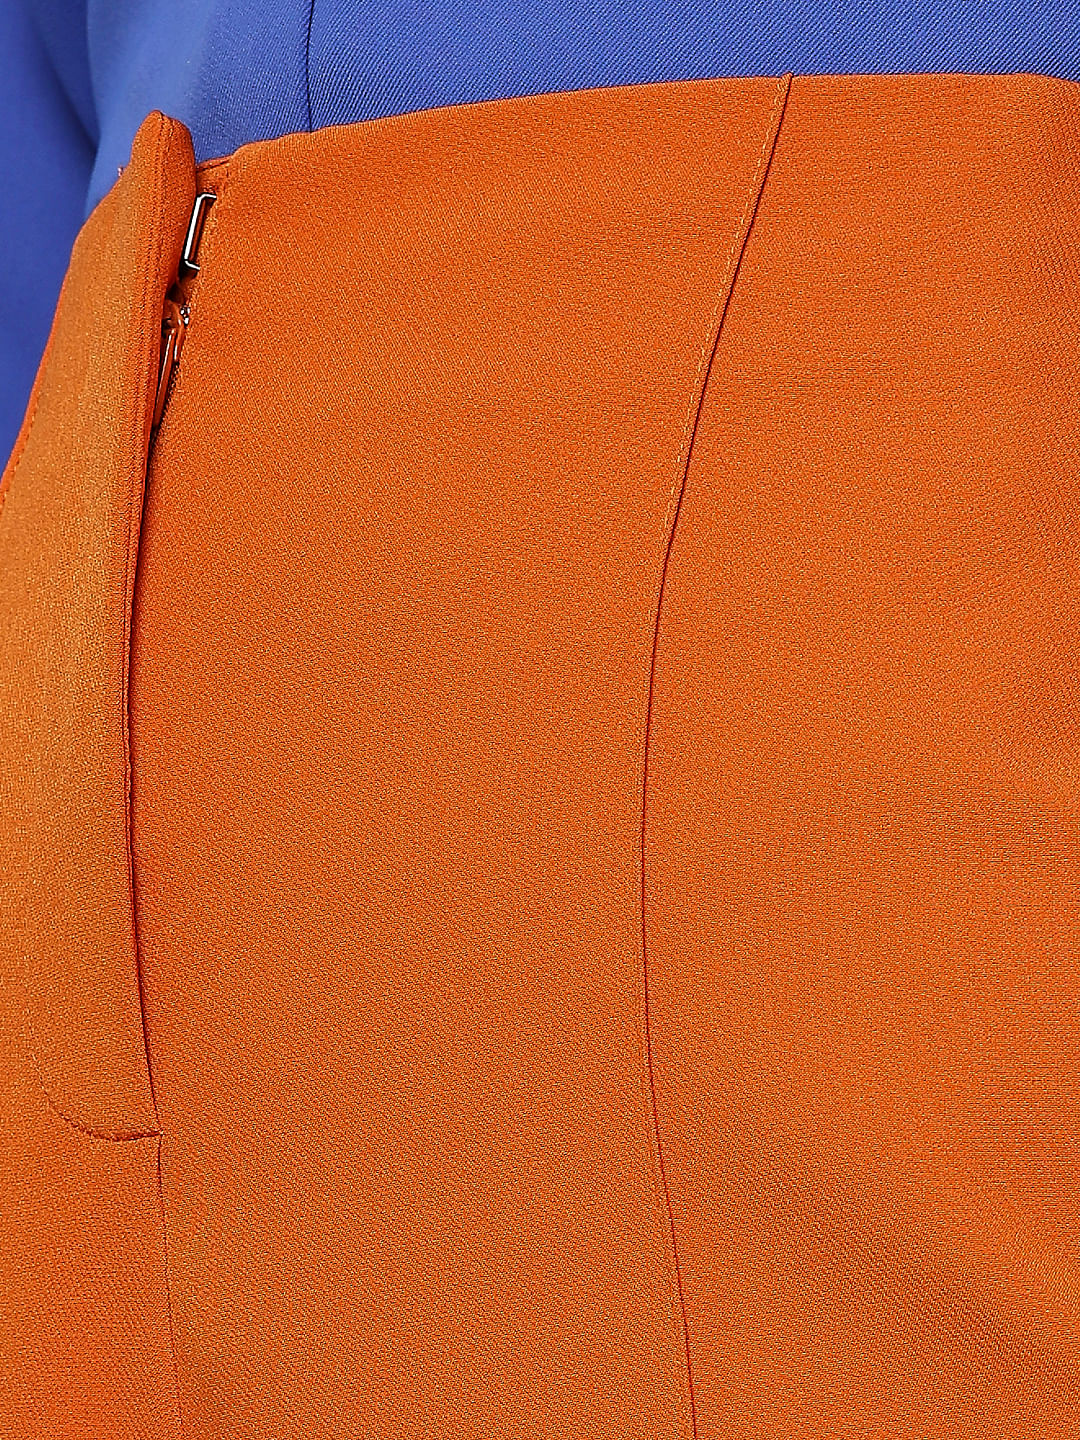 Paper Boy Trousers Burnt Orange Pants Cropped Size 2 | eBay